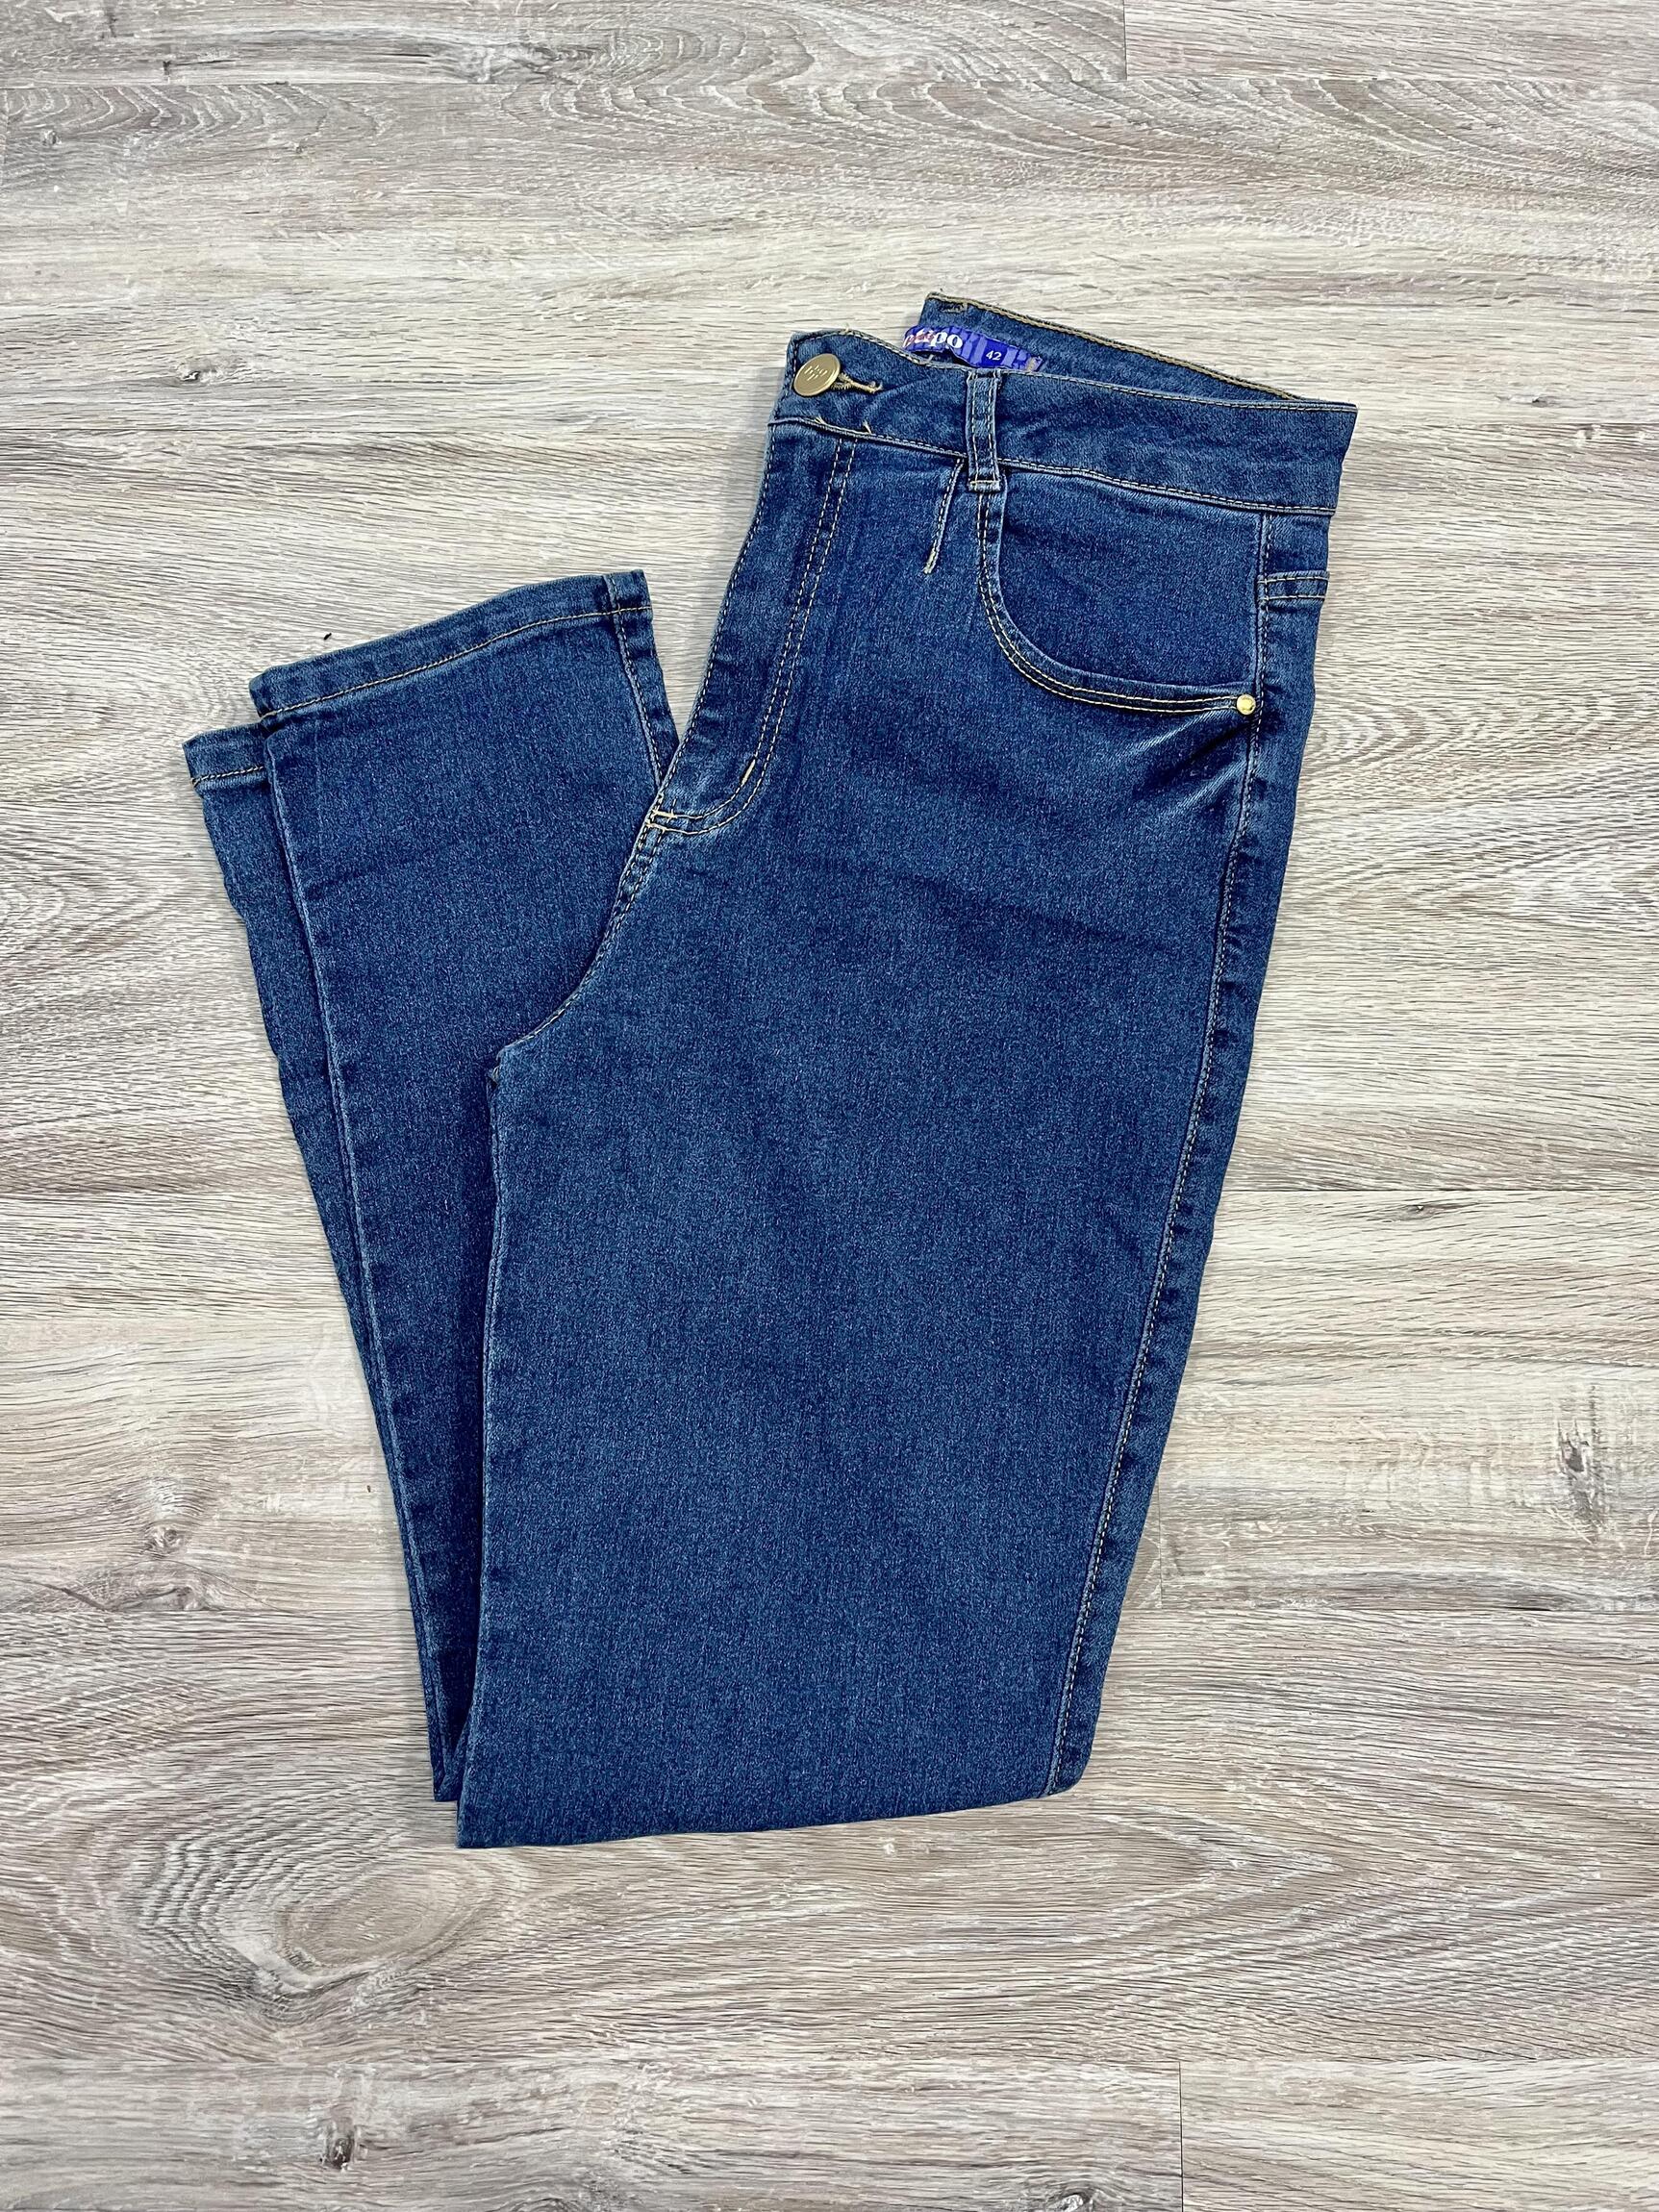 Comprar Calça Jeans Mom Plus Size - a partir de R$152,00 - Lari Pádua Store